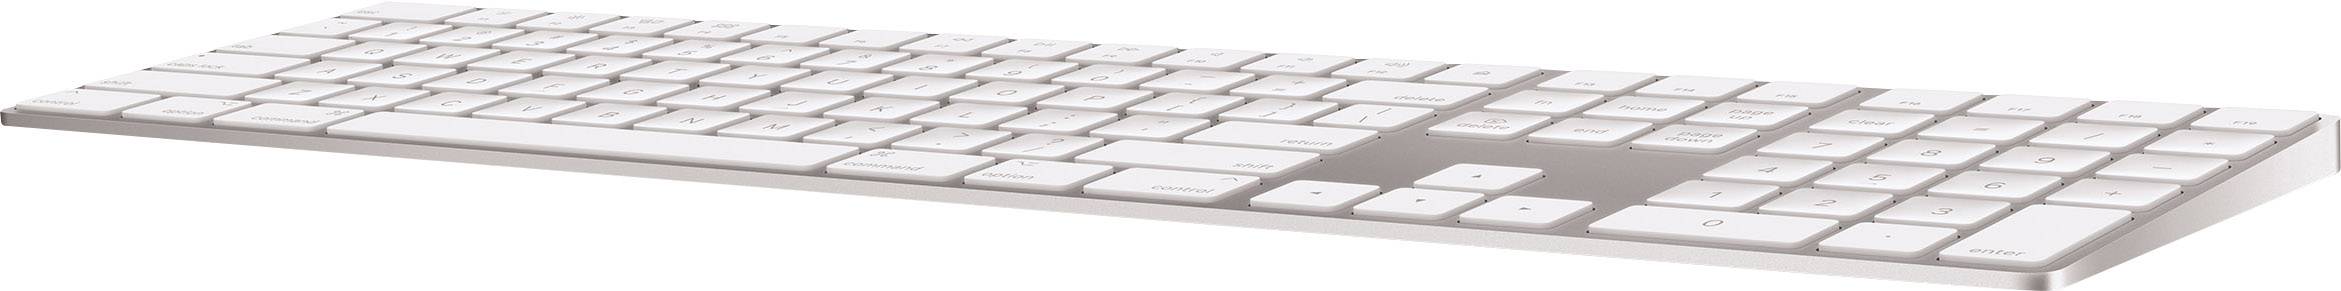 apple keyboard with numeric keypad